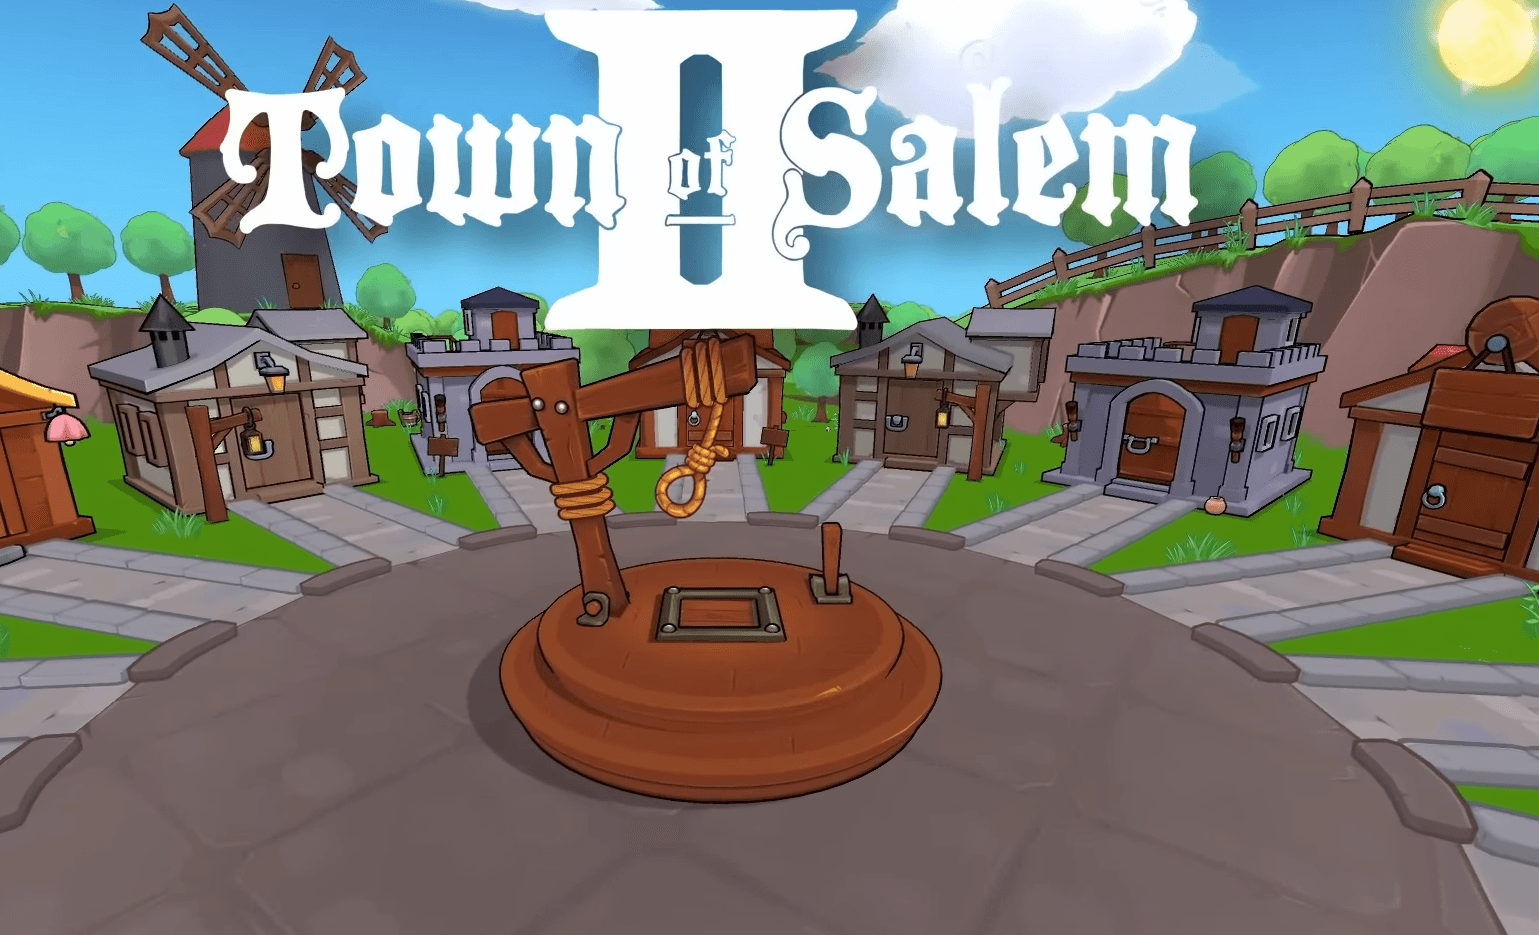 Town of Salem 2 *NEW* Prosecutor Role is OP 